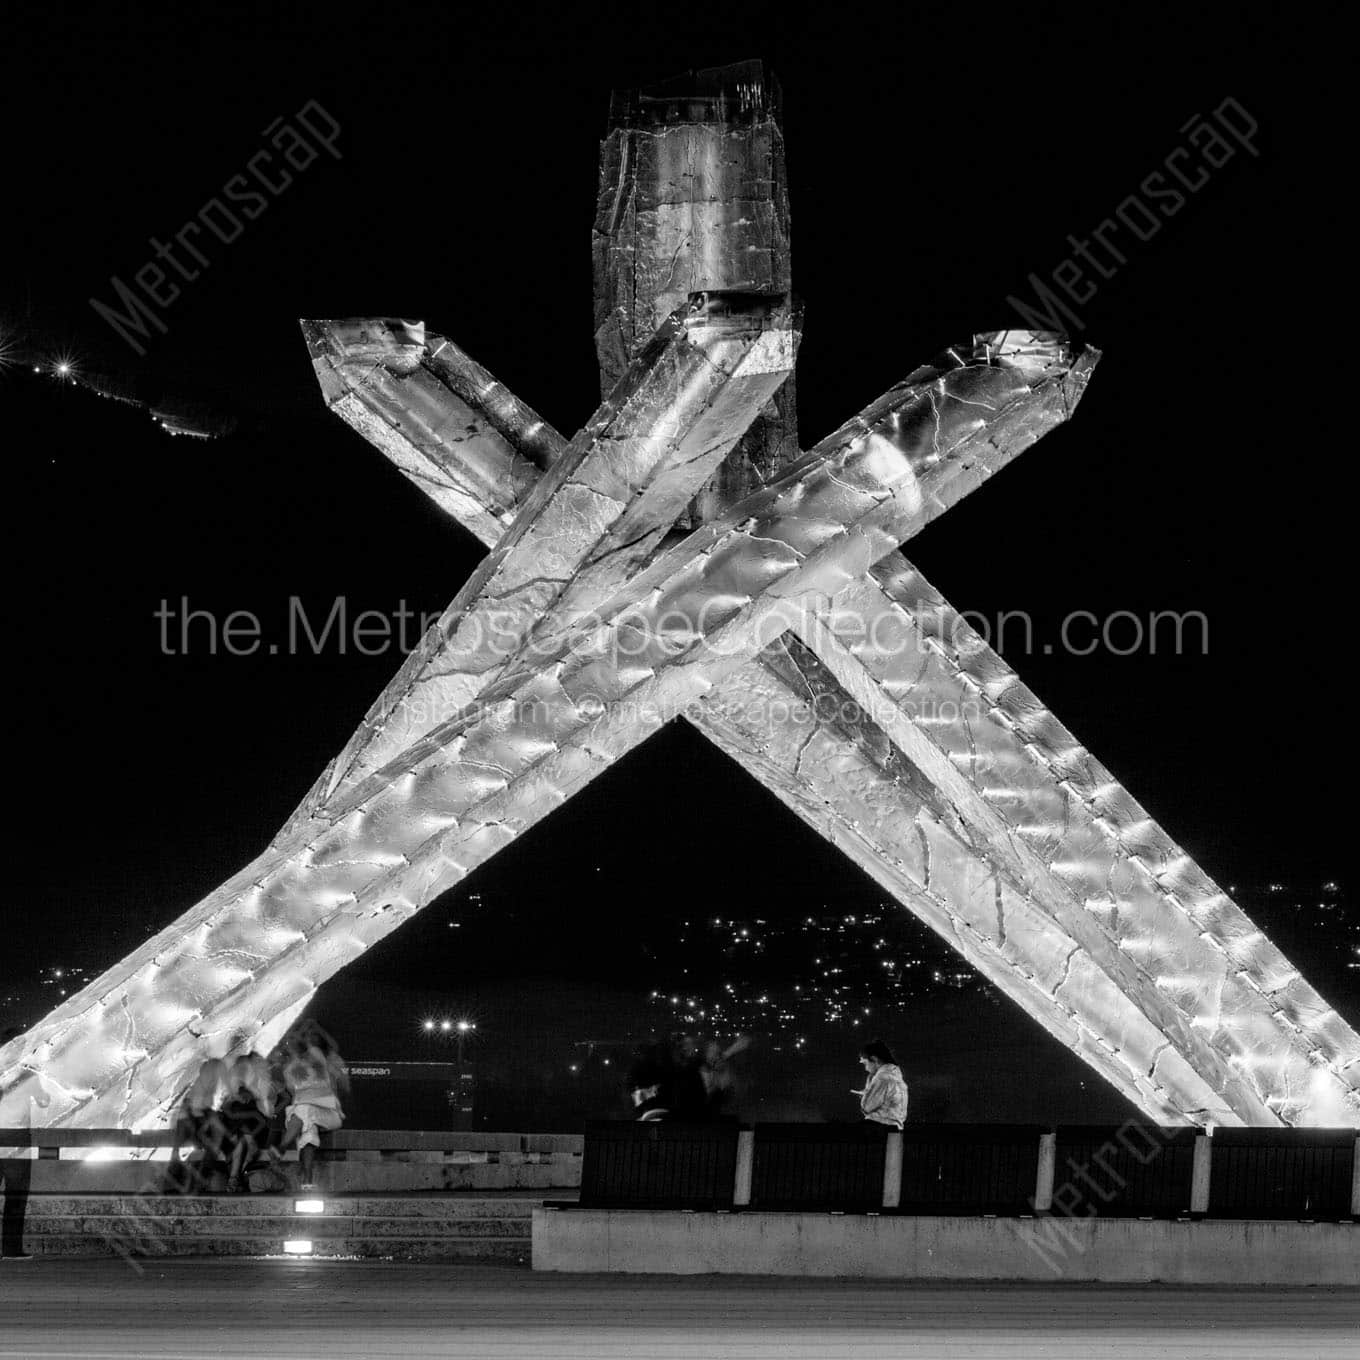 vancouver 2010 olympic cauldron at night Black & White Office Art